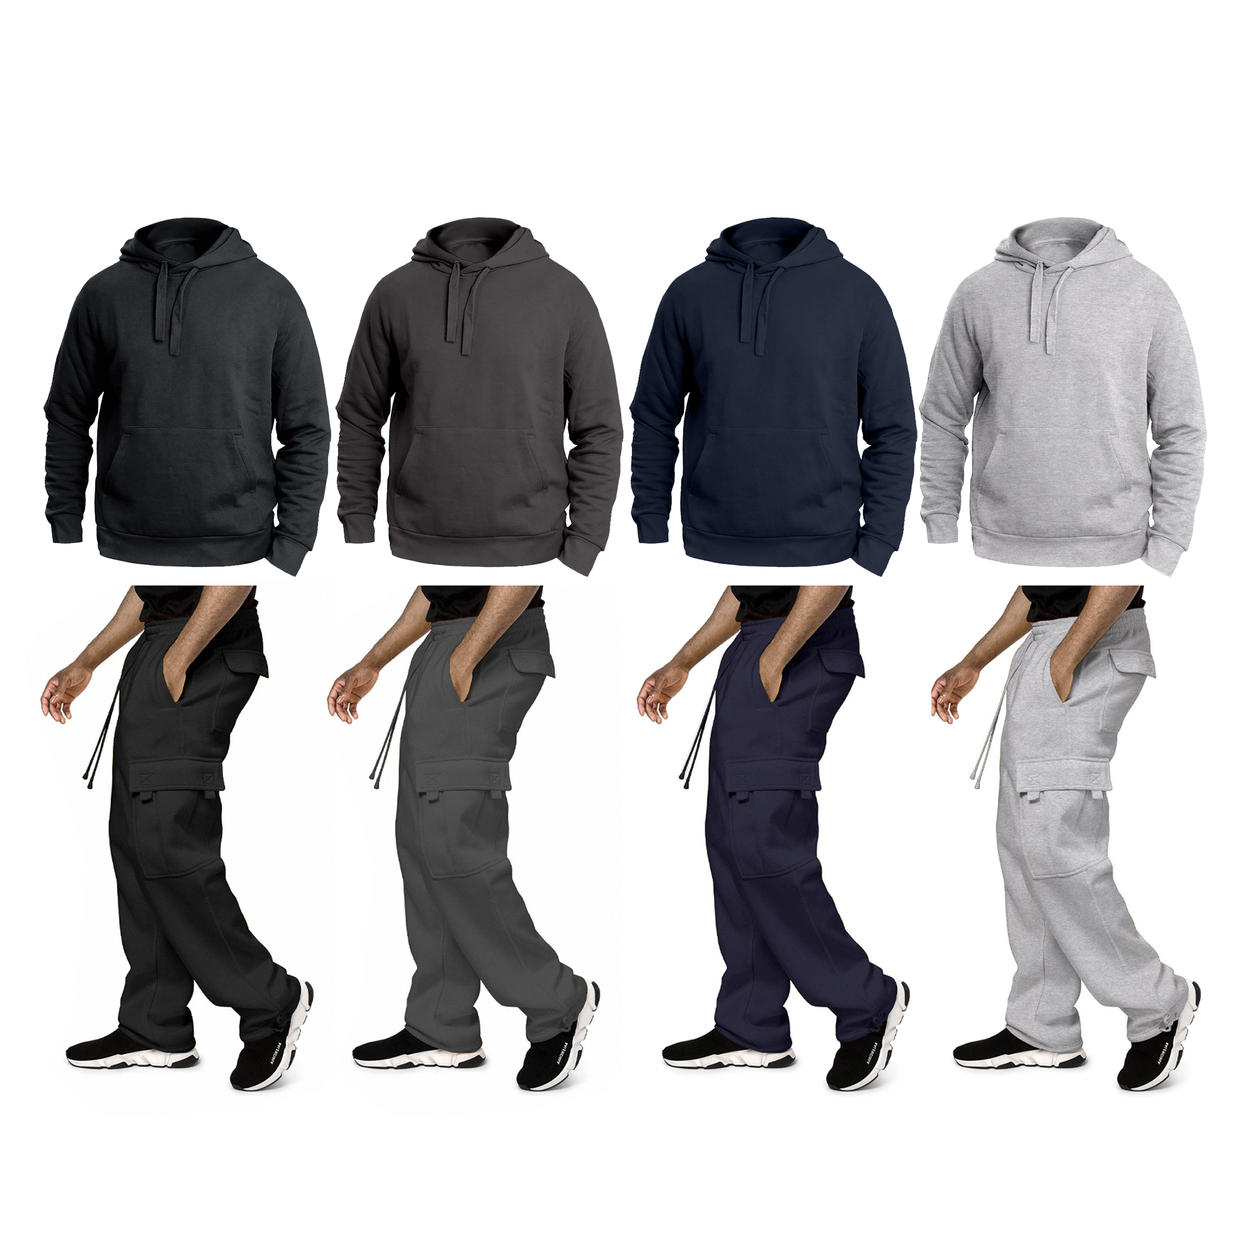 Multi-Pack: Big & Tall Men's Winter Warm Cozy Athletic Fleece Lined Multi-Pocket Cargo Sweatsuit - Black, 2-pack, Large